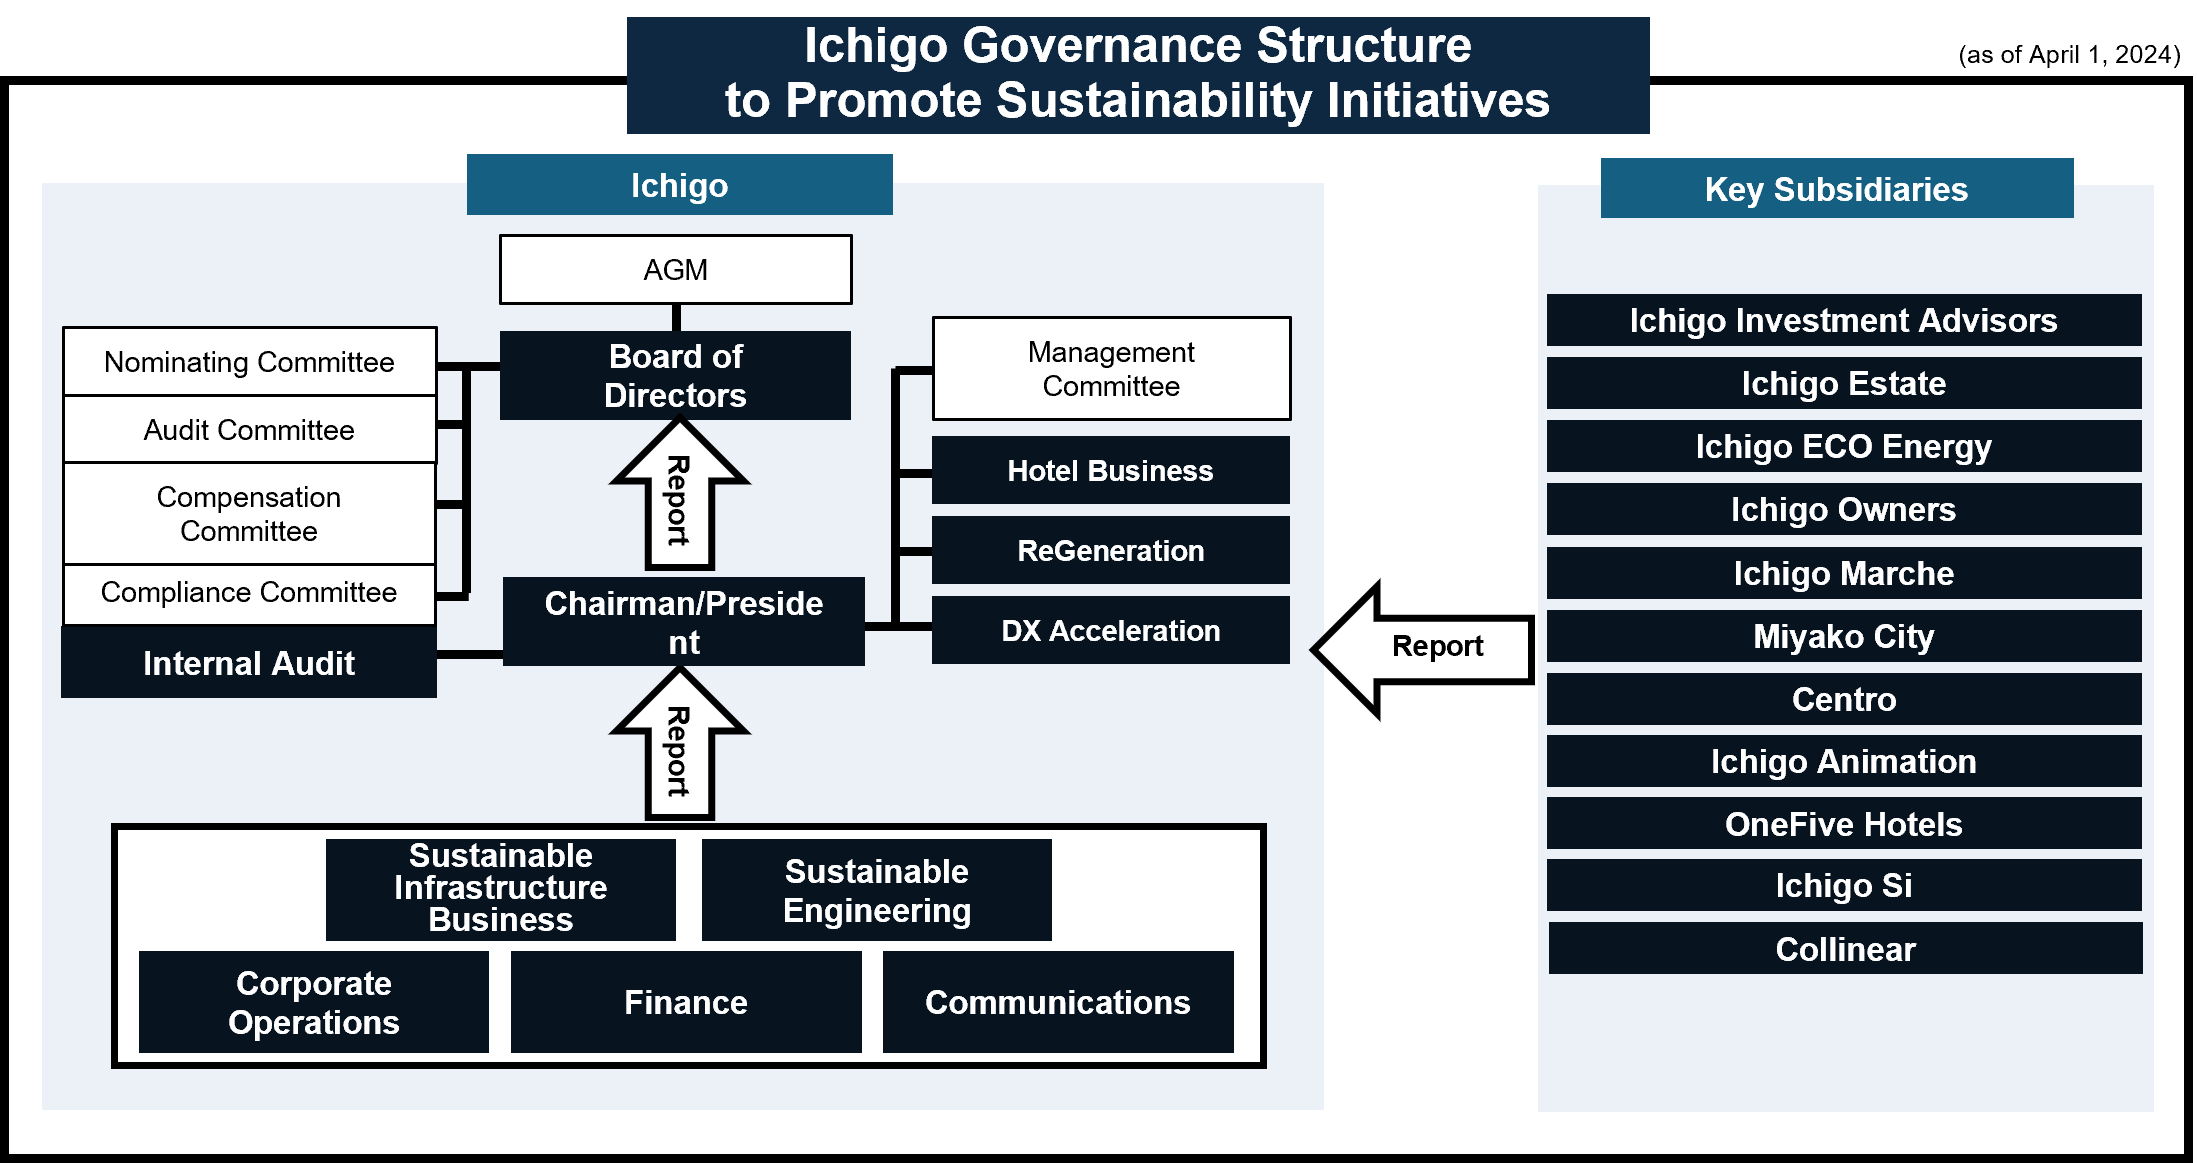 Ichigo Governance Structure to Promote Sustainability Initiatives